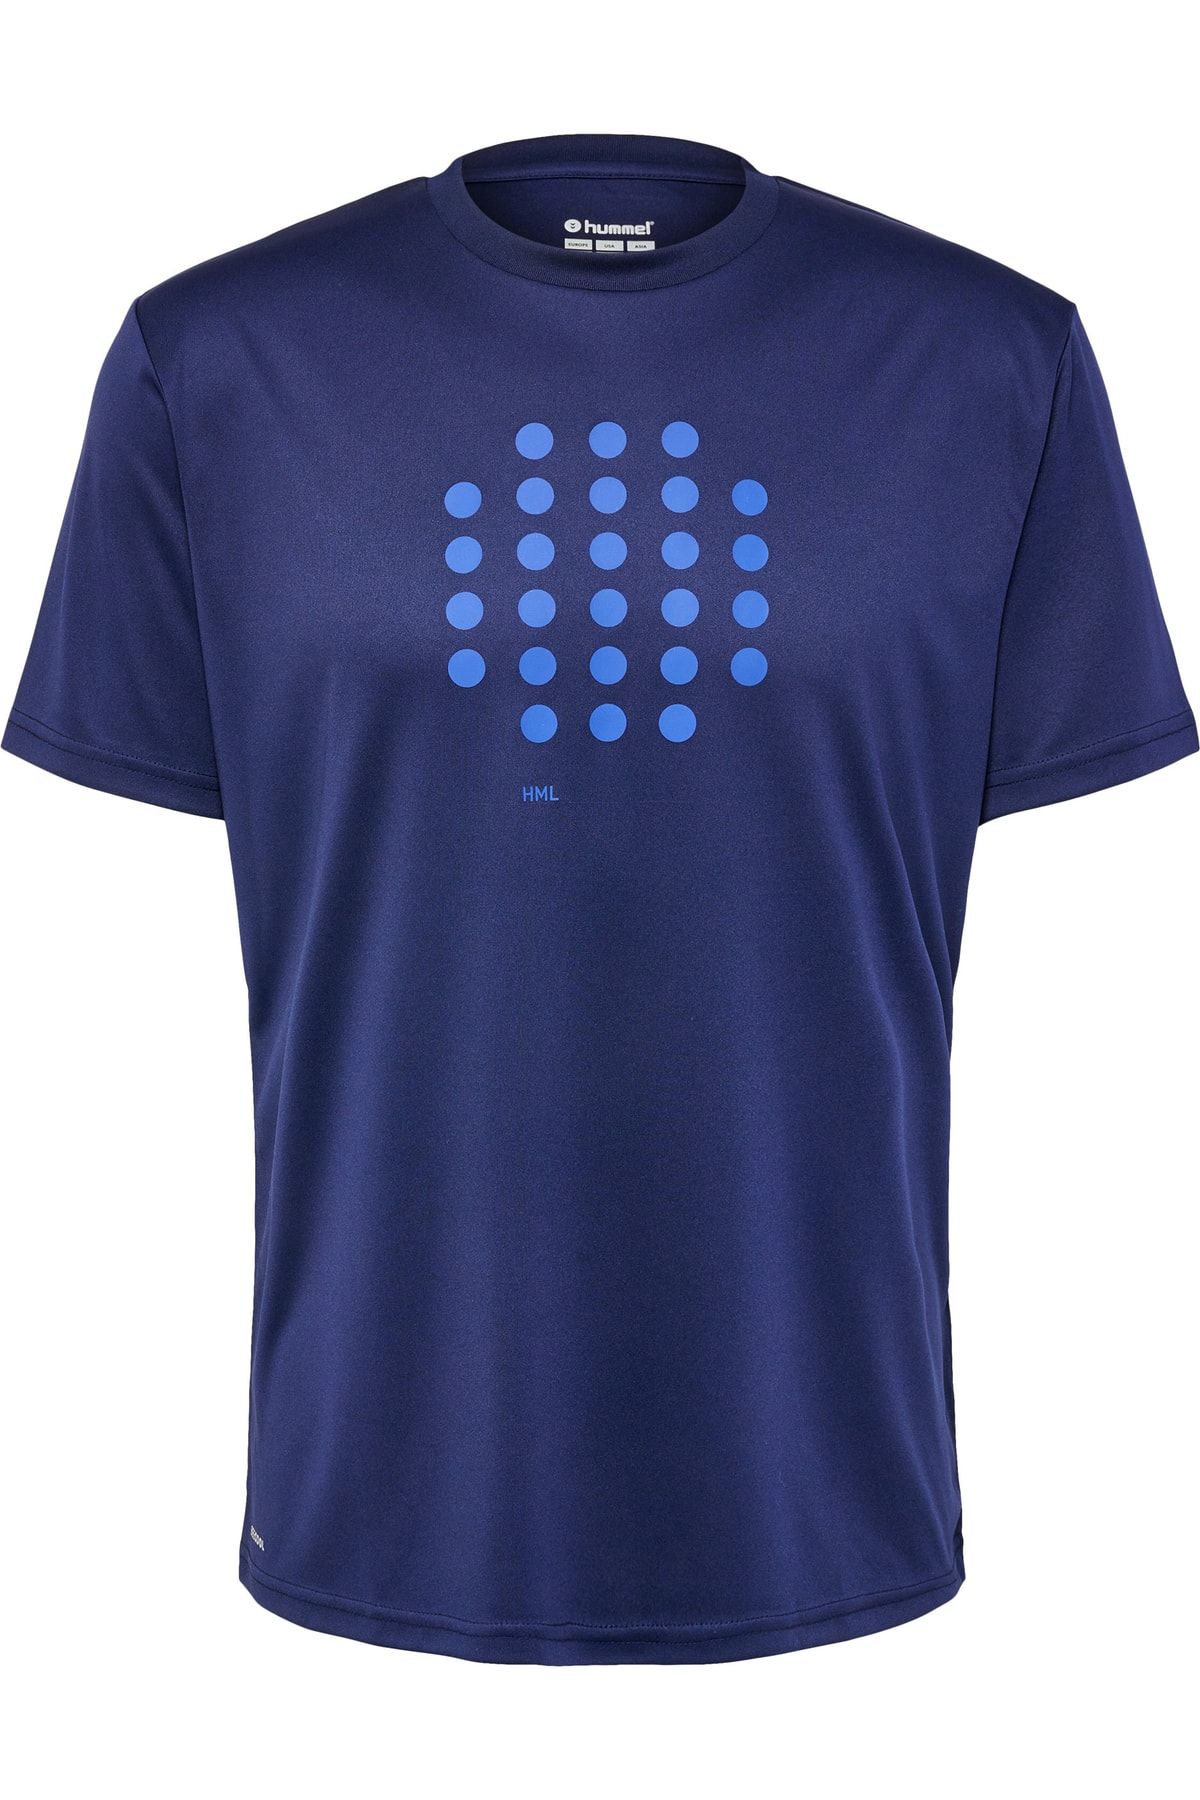 HUMMEL T-Shirt - Blau - Fit Trendyol - Regular